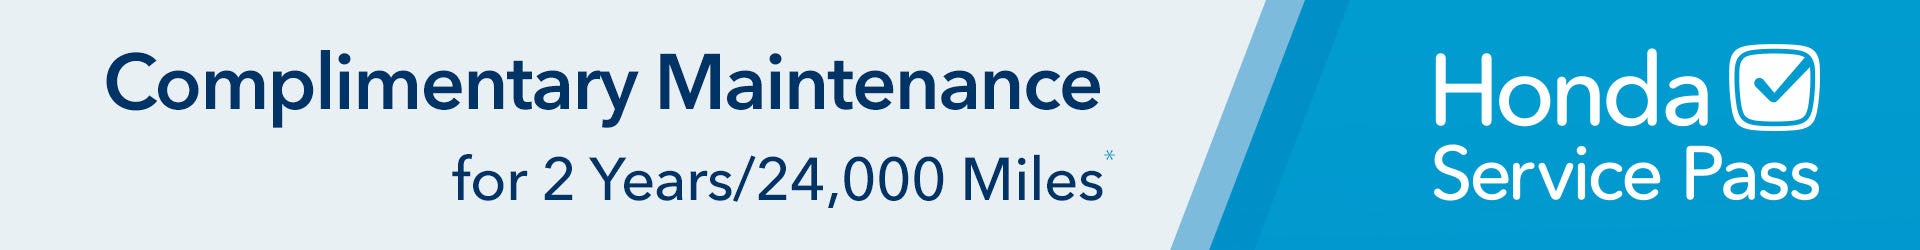 Complimentary Maintenance for 2 years / 24,000 Miles Honda Service Pass | Bristol Honda in Bristol TN